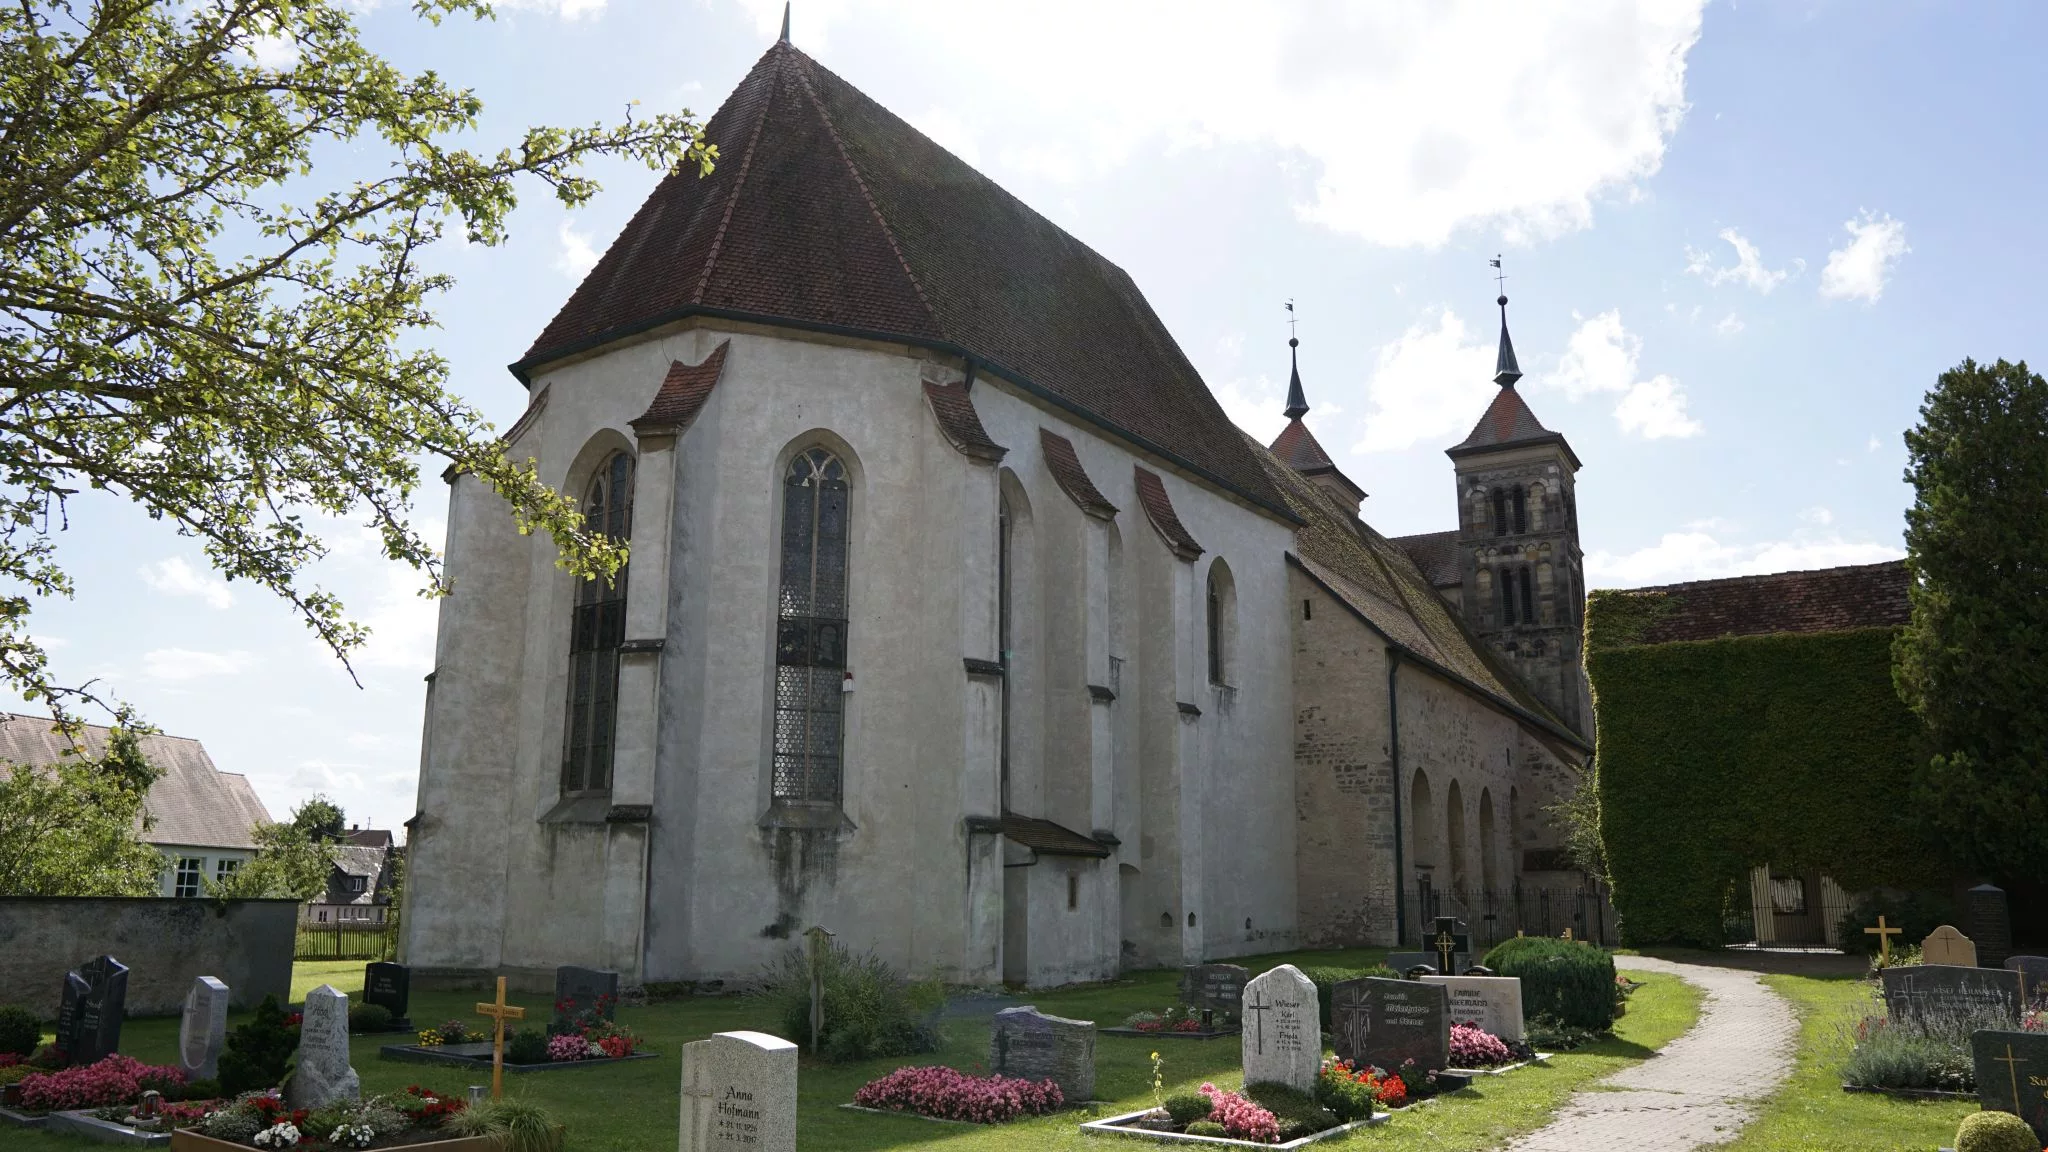 Kloster Auhausen, Germany